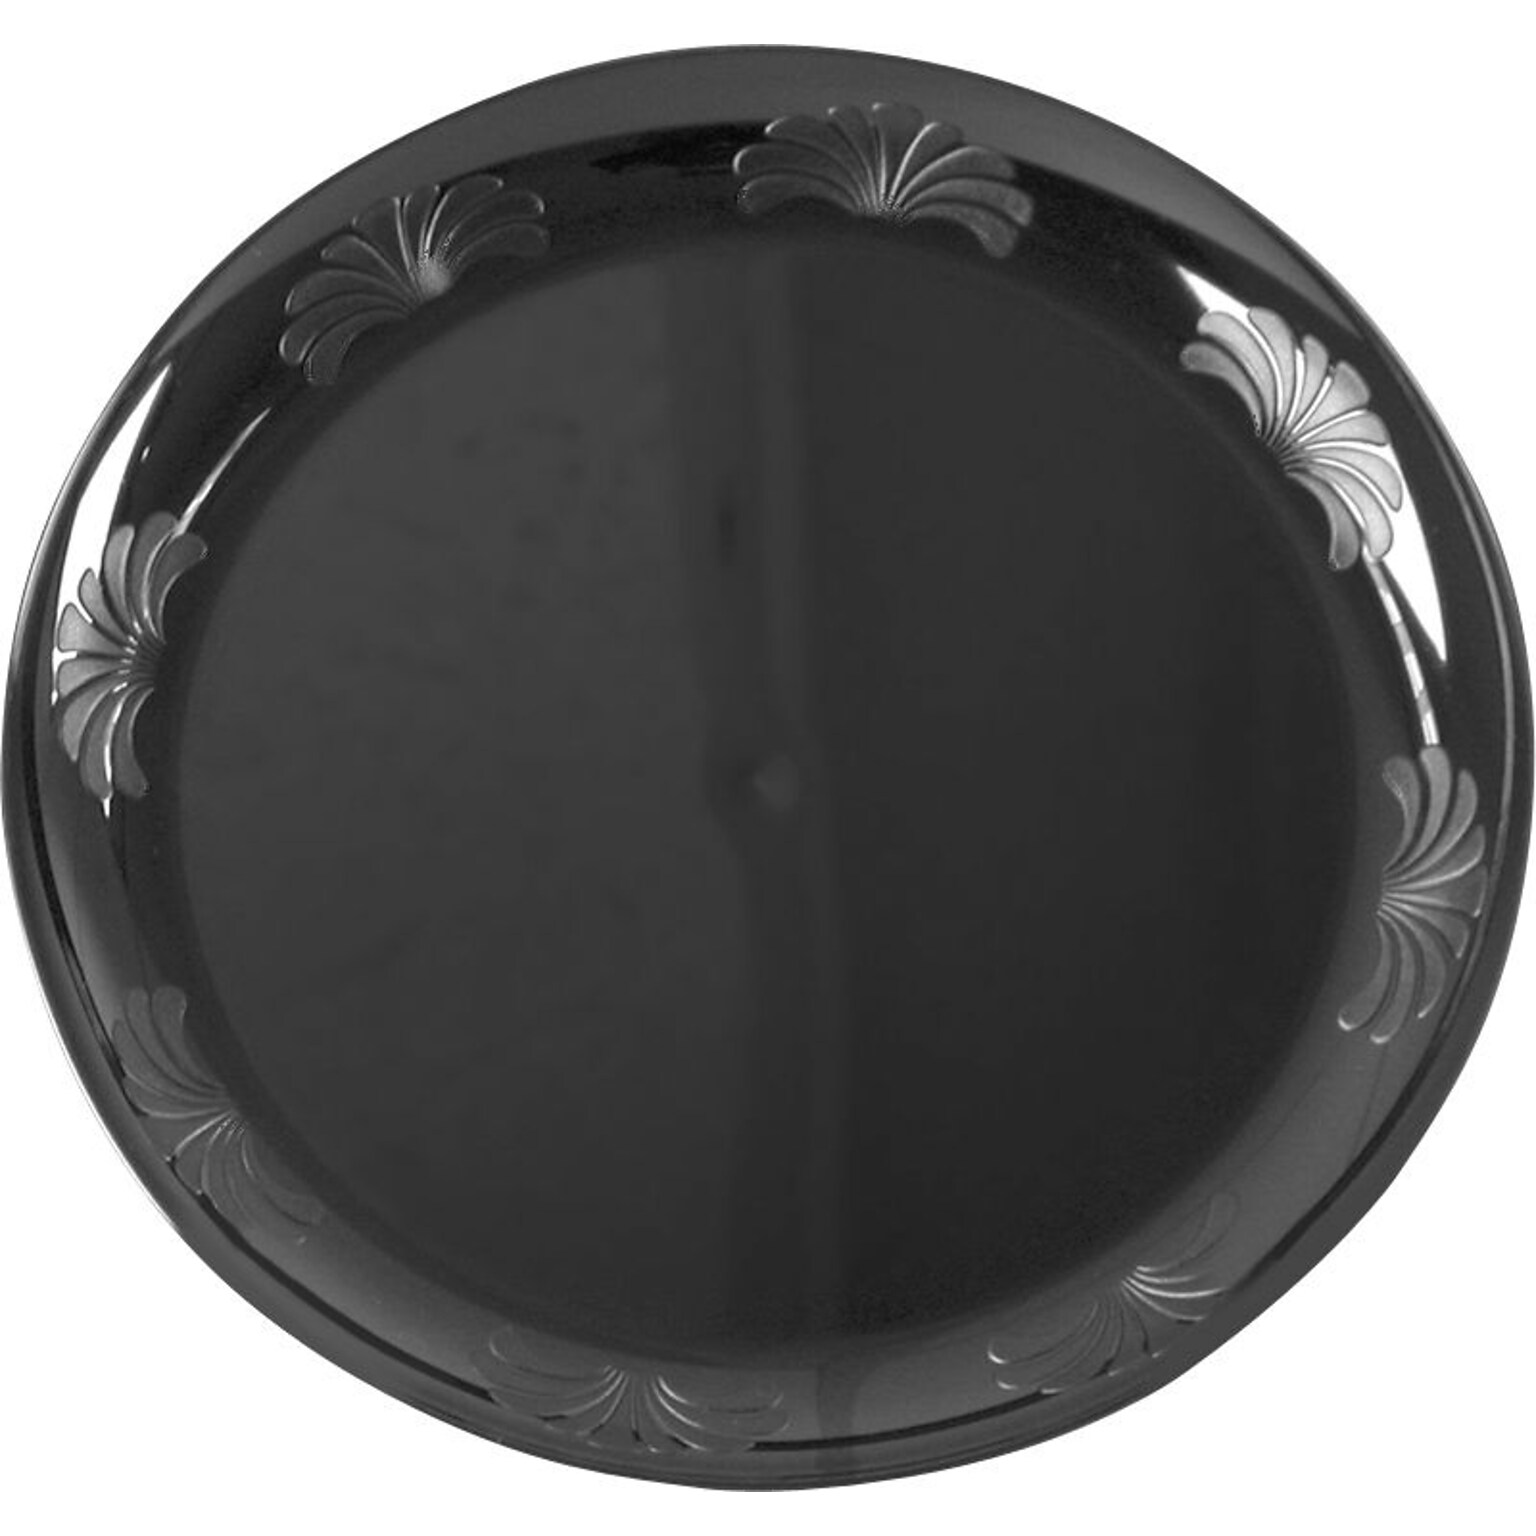 WNA Designerware Plastic Plates, 9, Black, 180/Carton (WNADWP9180BK)